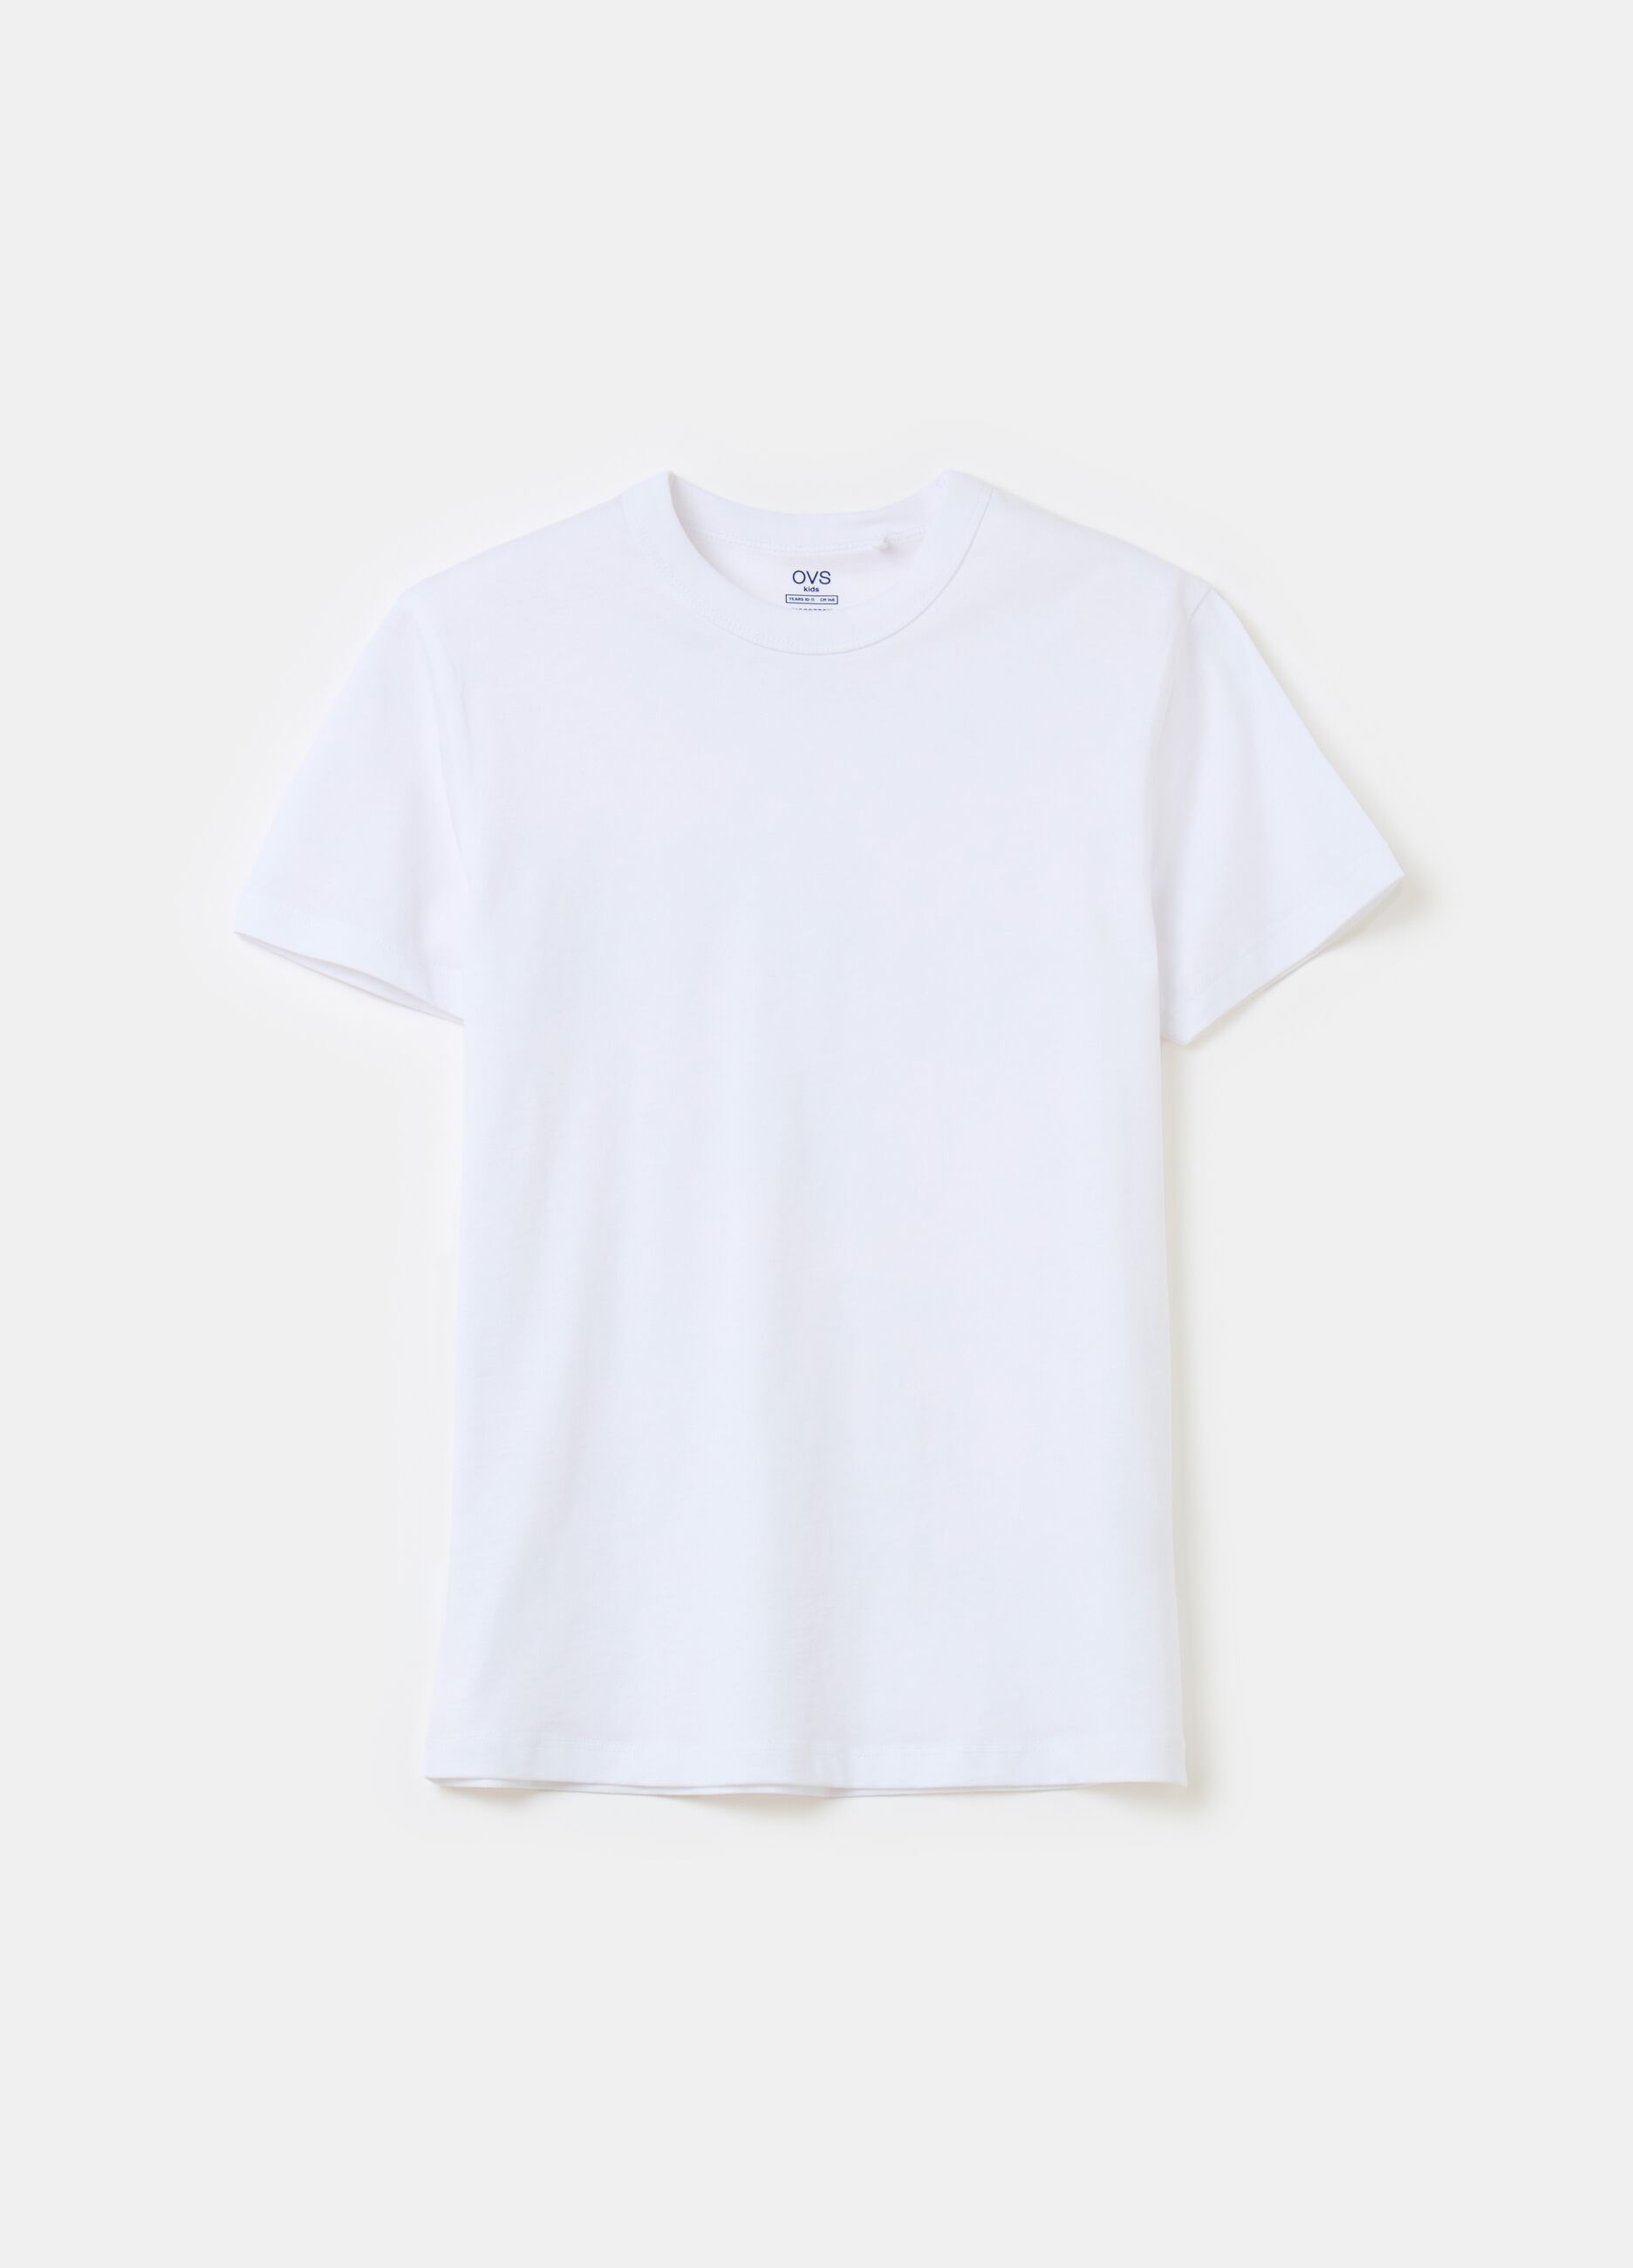 Essential T-shirt in organic cotton